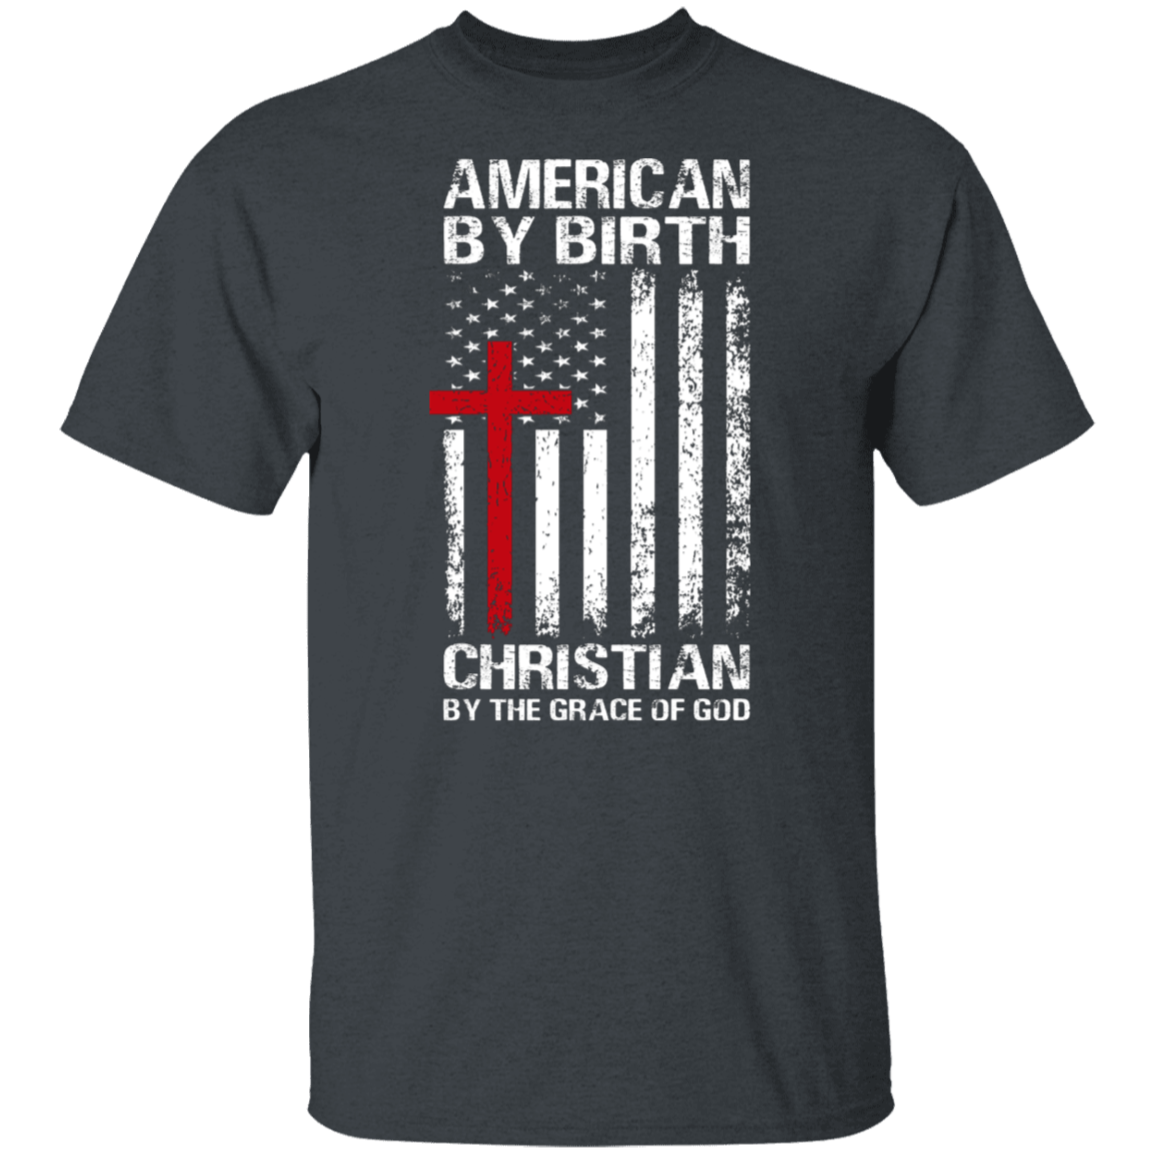 American By Birth, America, American, Christian, Land of God - Unisex T-Shirt